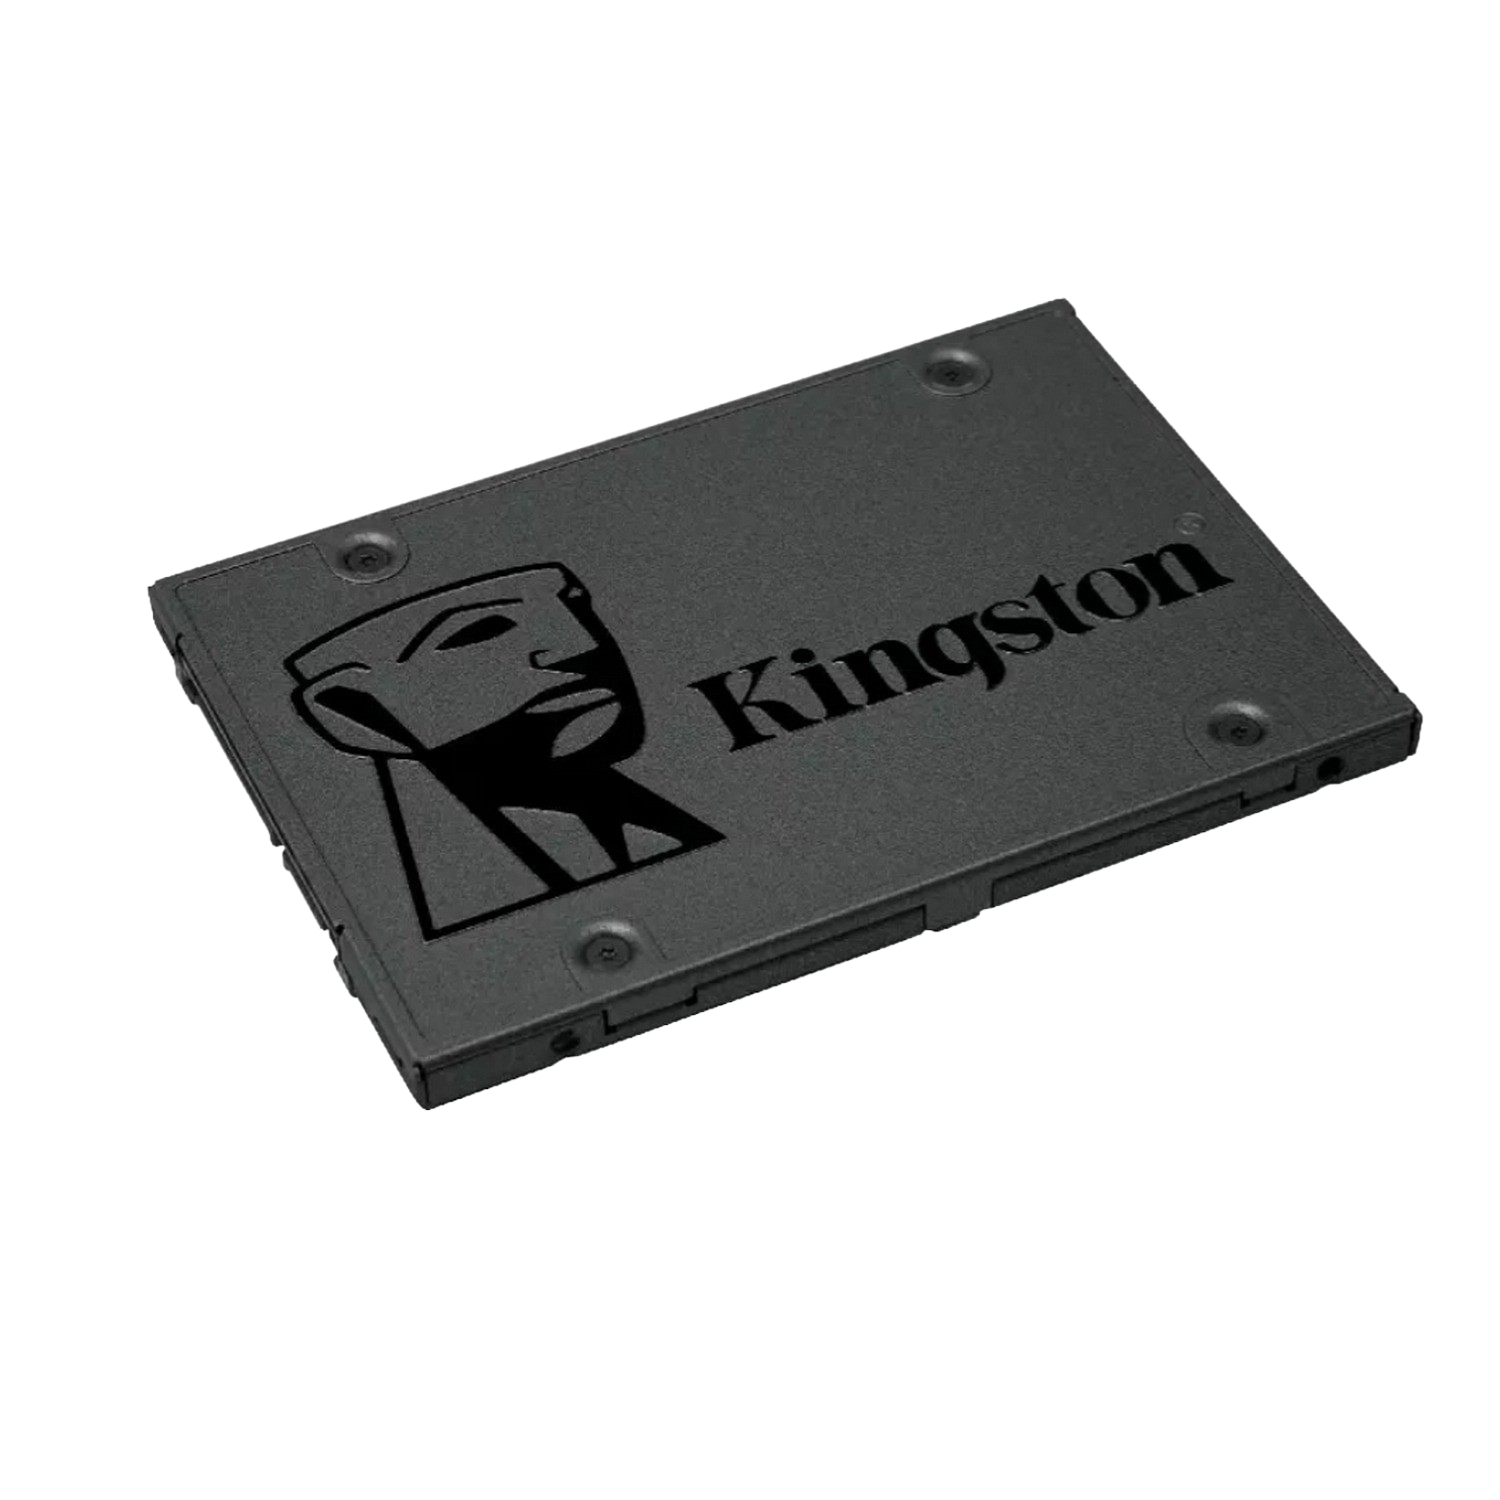 Kingston A400 Ssd 480gb disco duro interno 2.5 sata rev 3.0 sa400s37480g 480 now 500 mbs solido sata3 25 technology